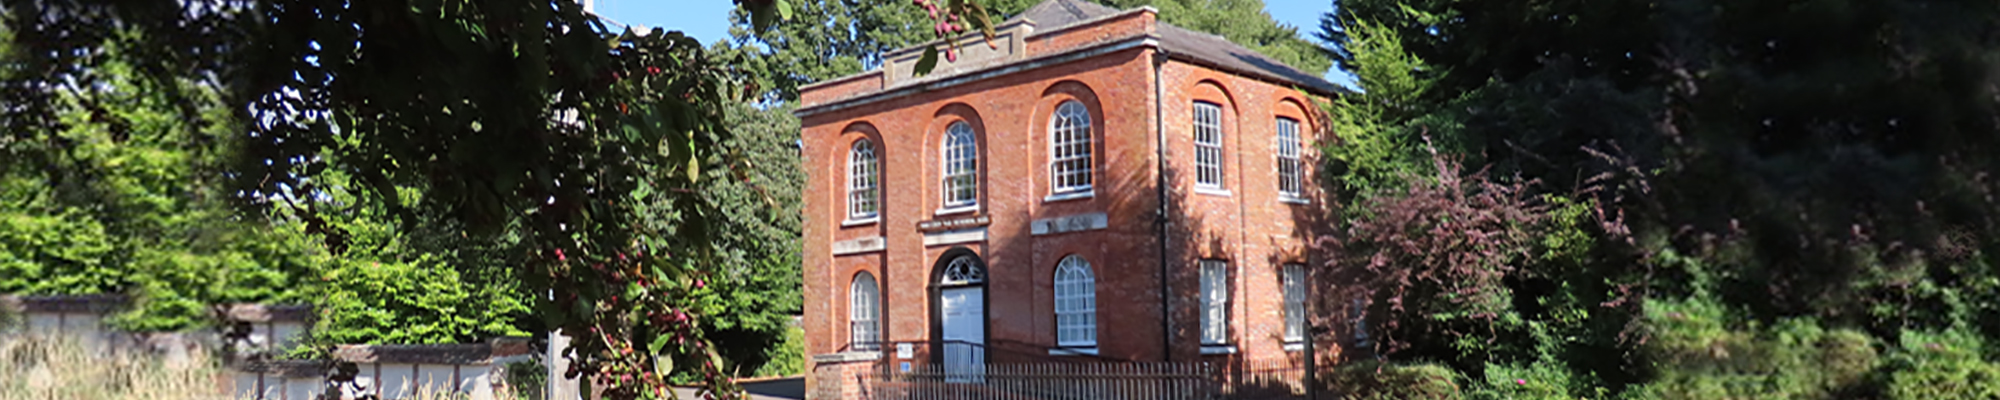 Thruxton Memorial Hall in Hampshire